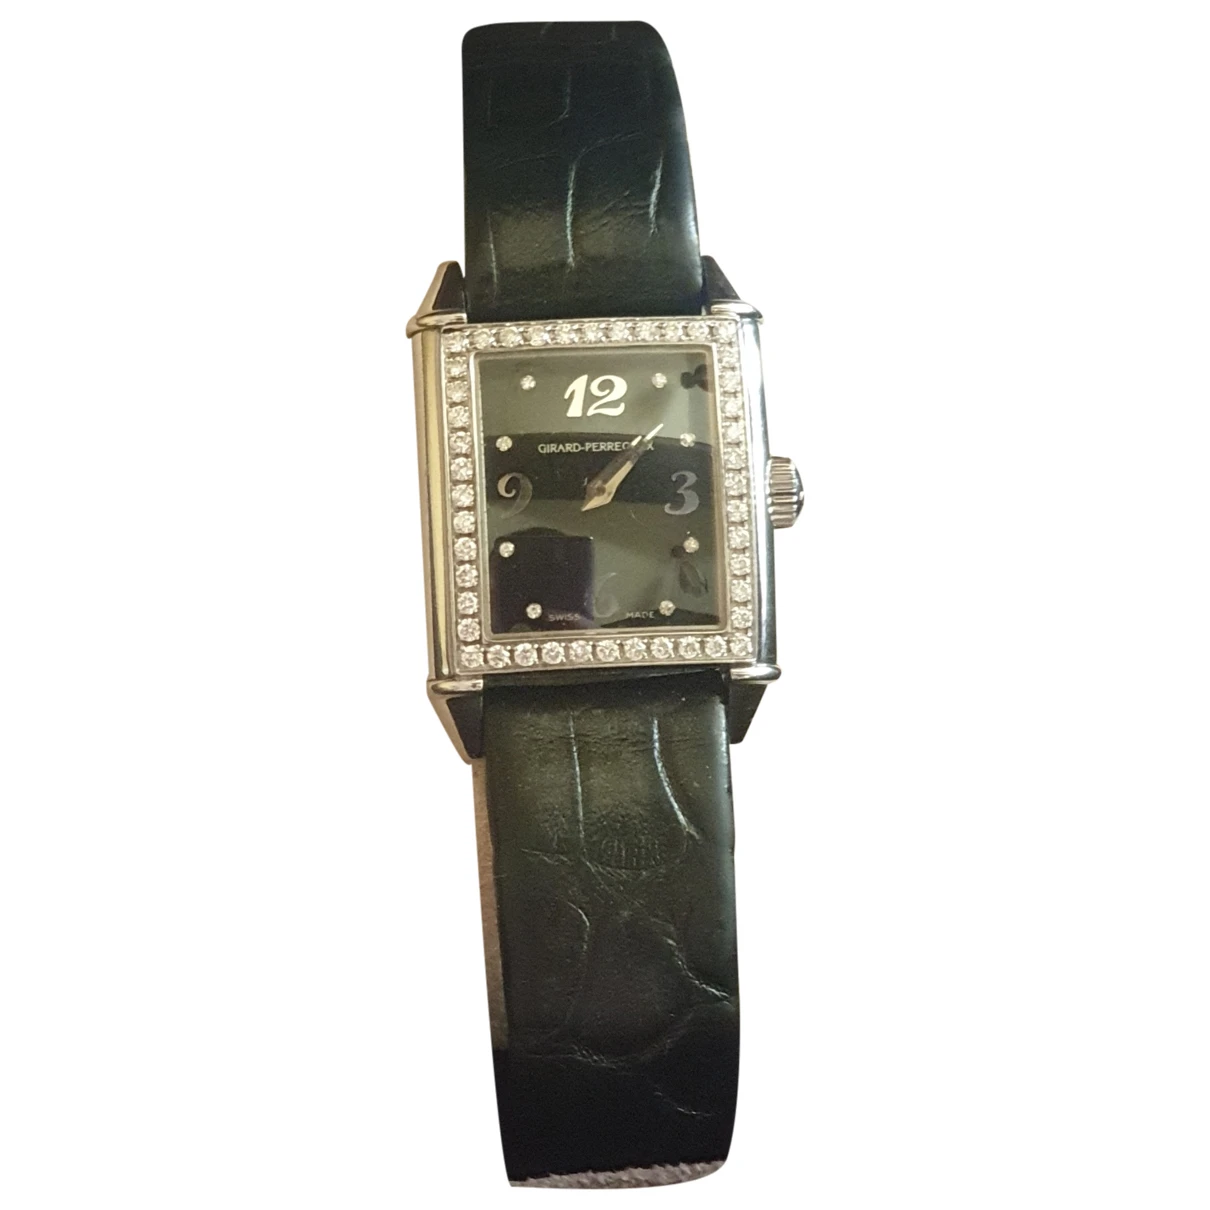 Pre-owned Girard-perregaux Watch In Black